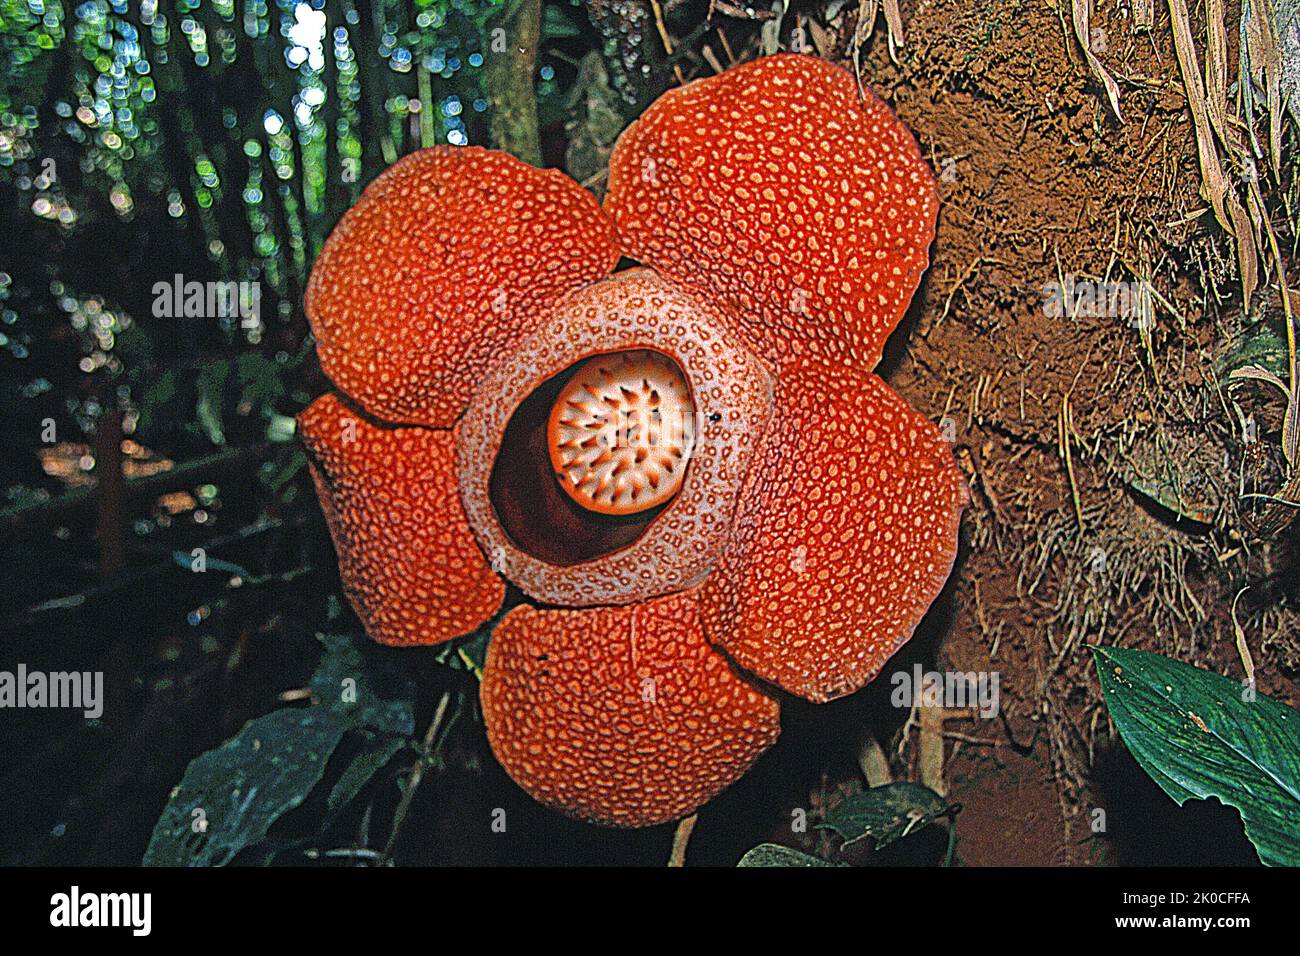 Giant Rafflesia (Rafflesia arnoldii) largest individual flower on earth, Borneo, Malaysia, Asia Stock Photo